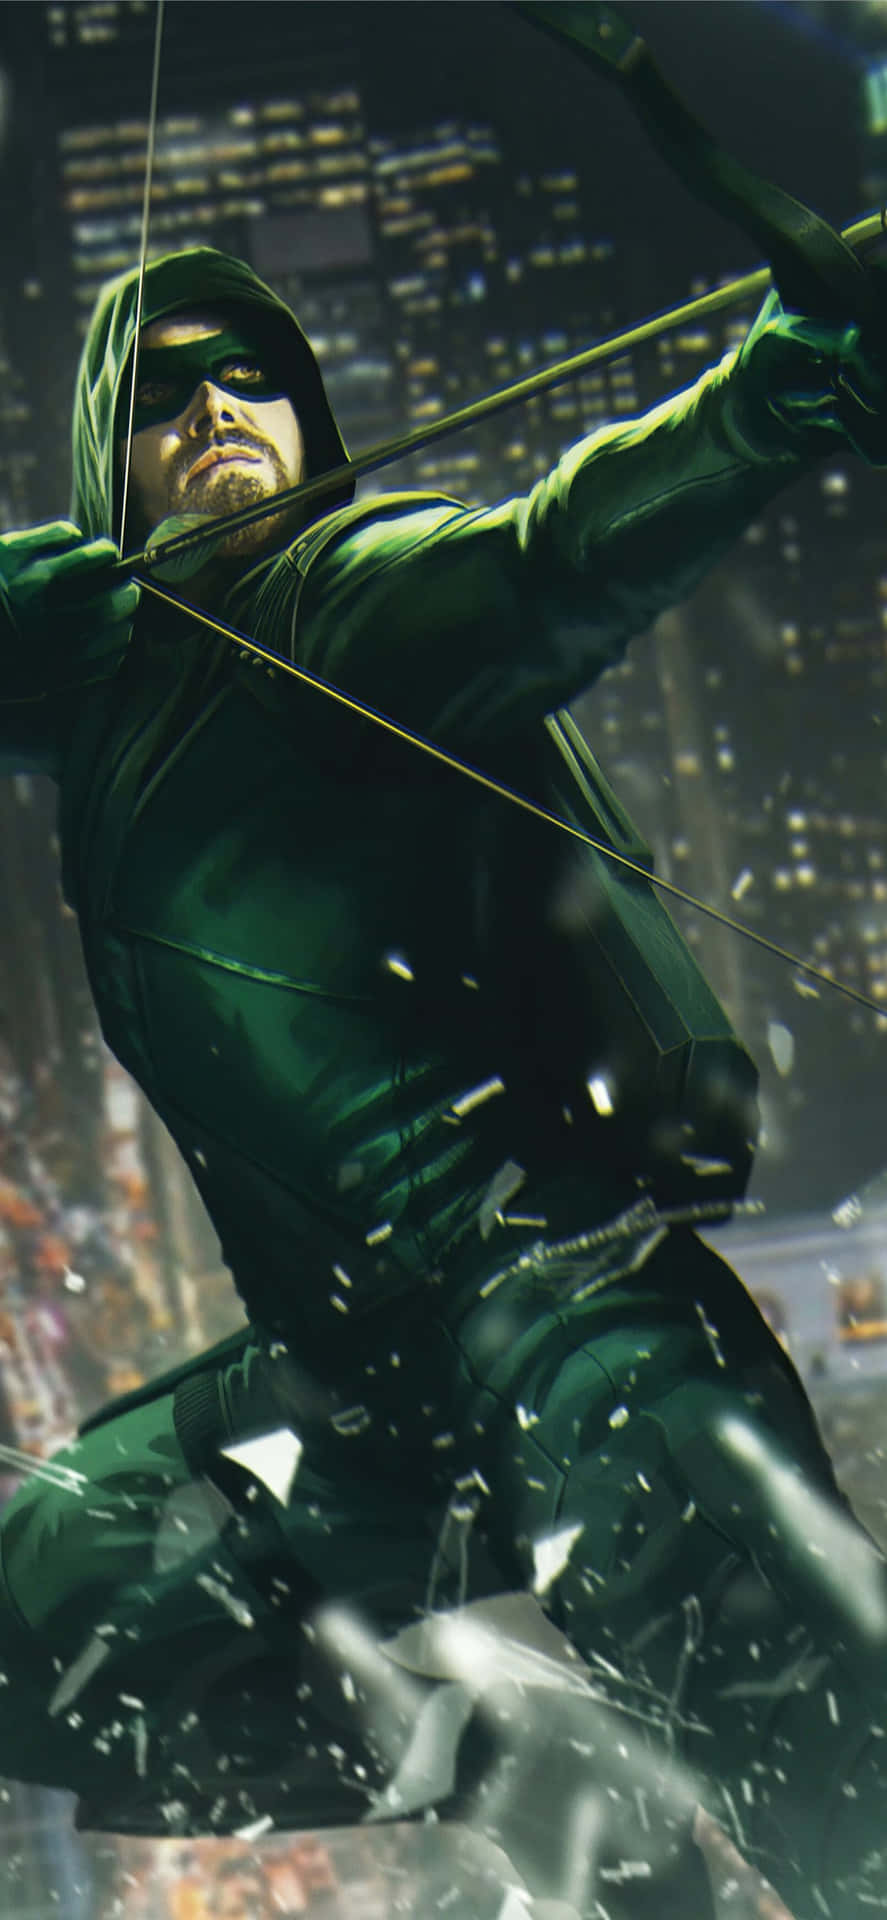 Caption: Intense Green Arrow Action on iPhone Wallpaper